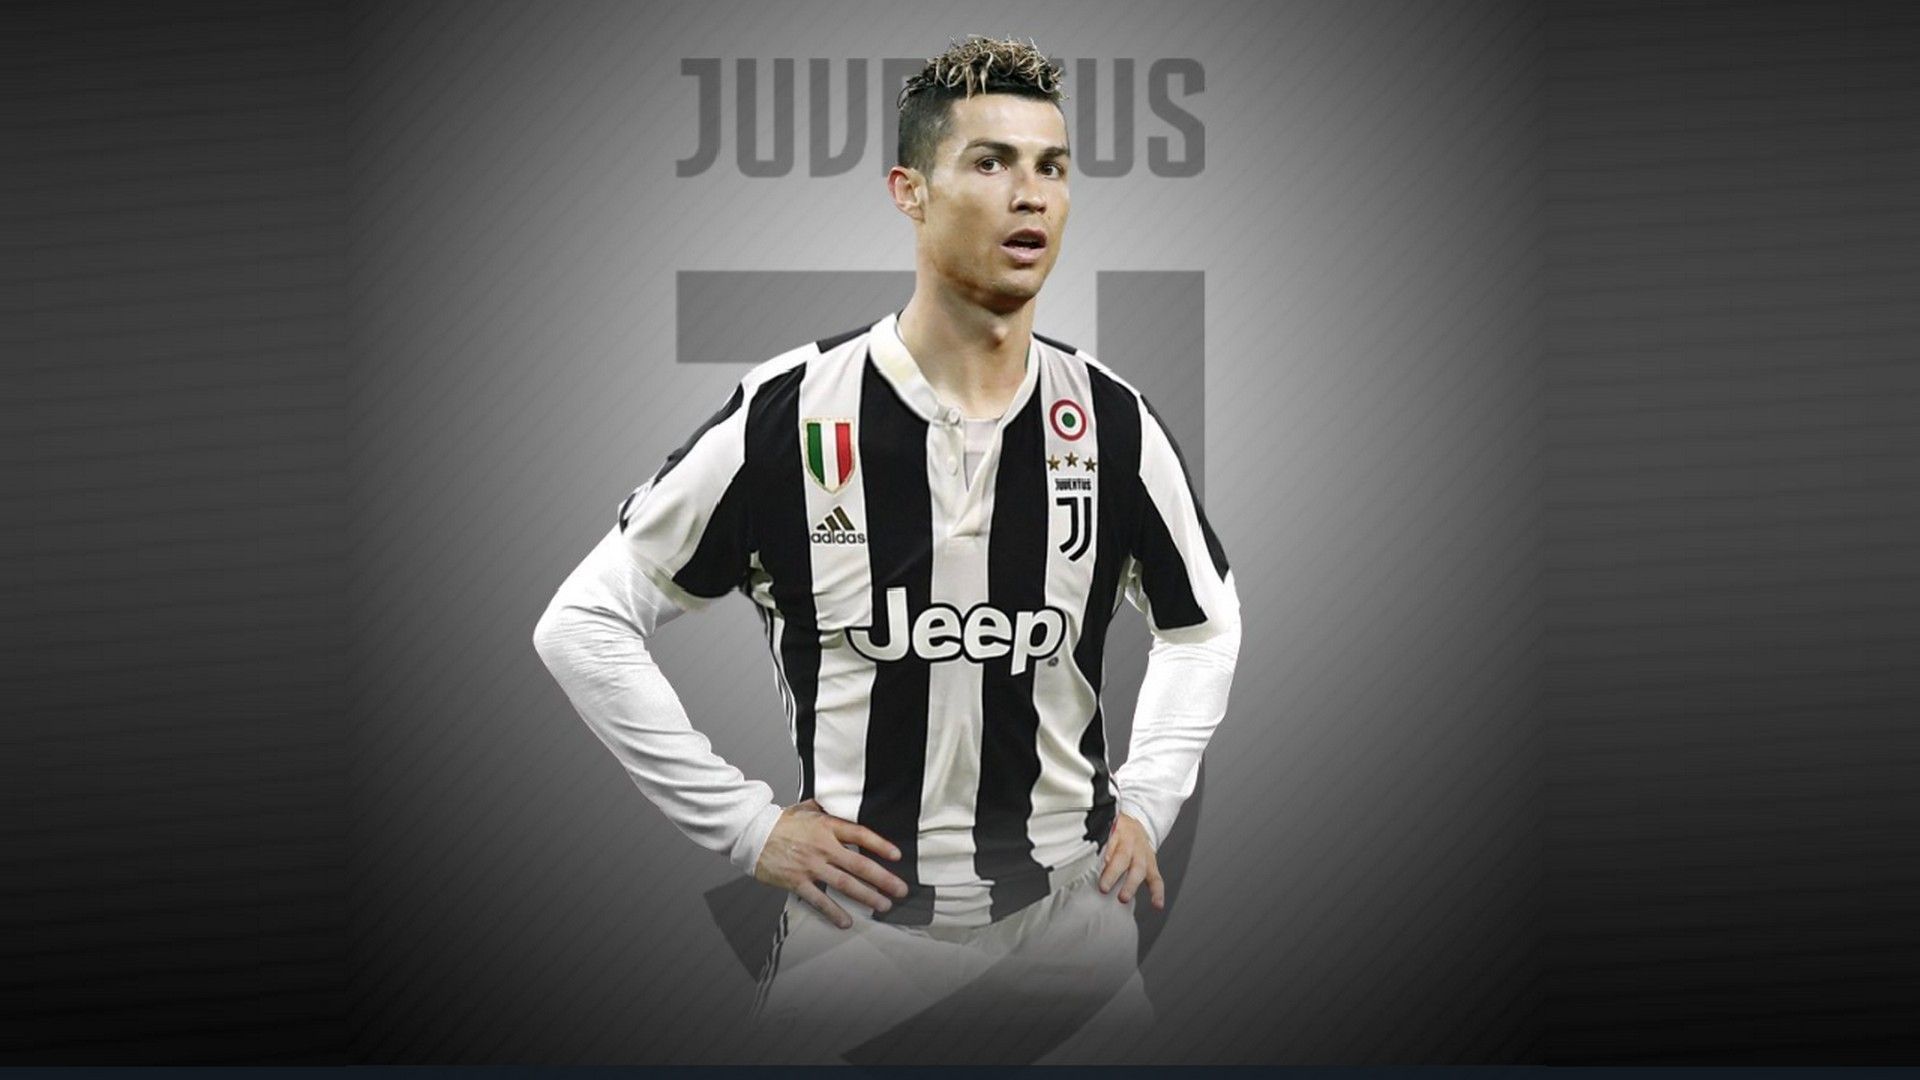 44+ Cristiano Ronaldo Juventus 2021 Wallpapers on ...